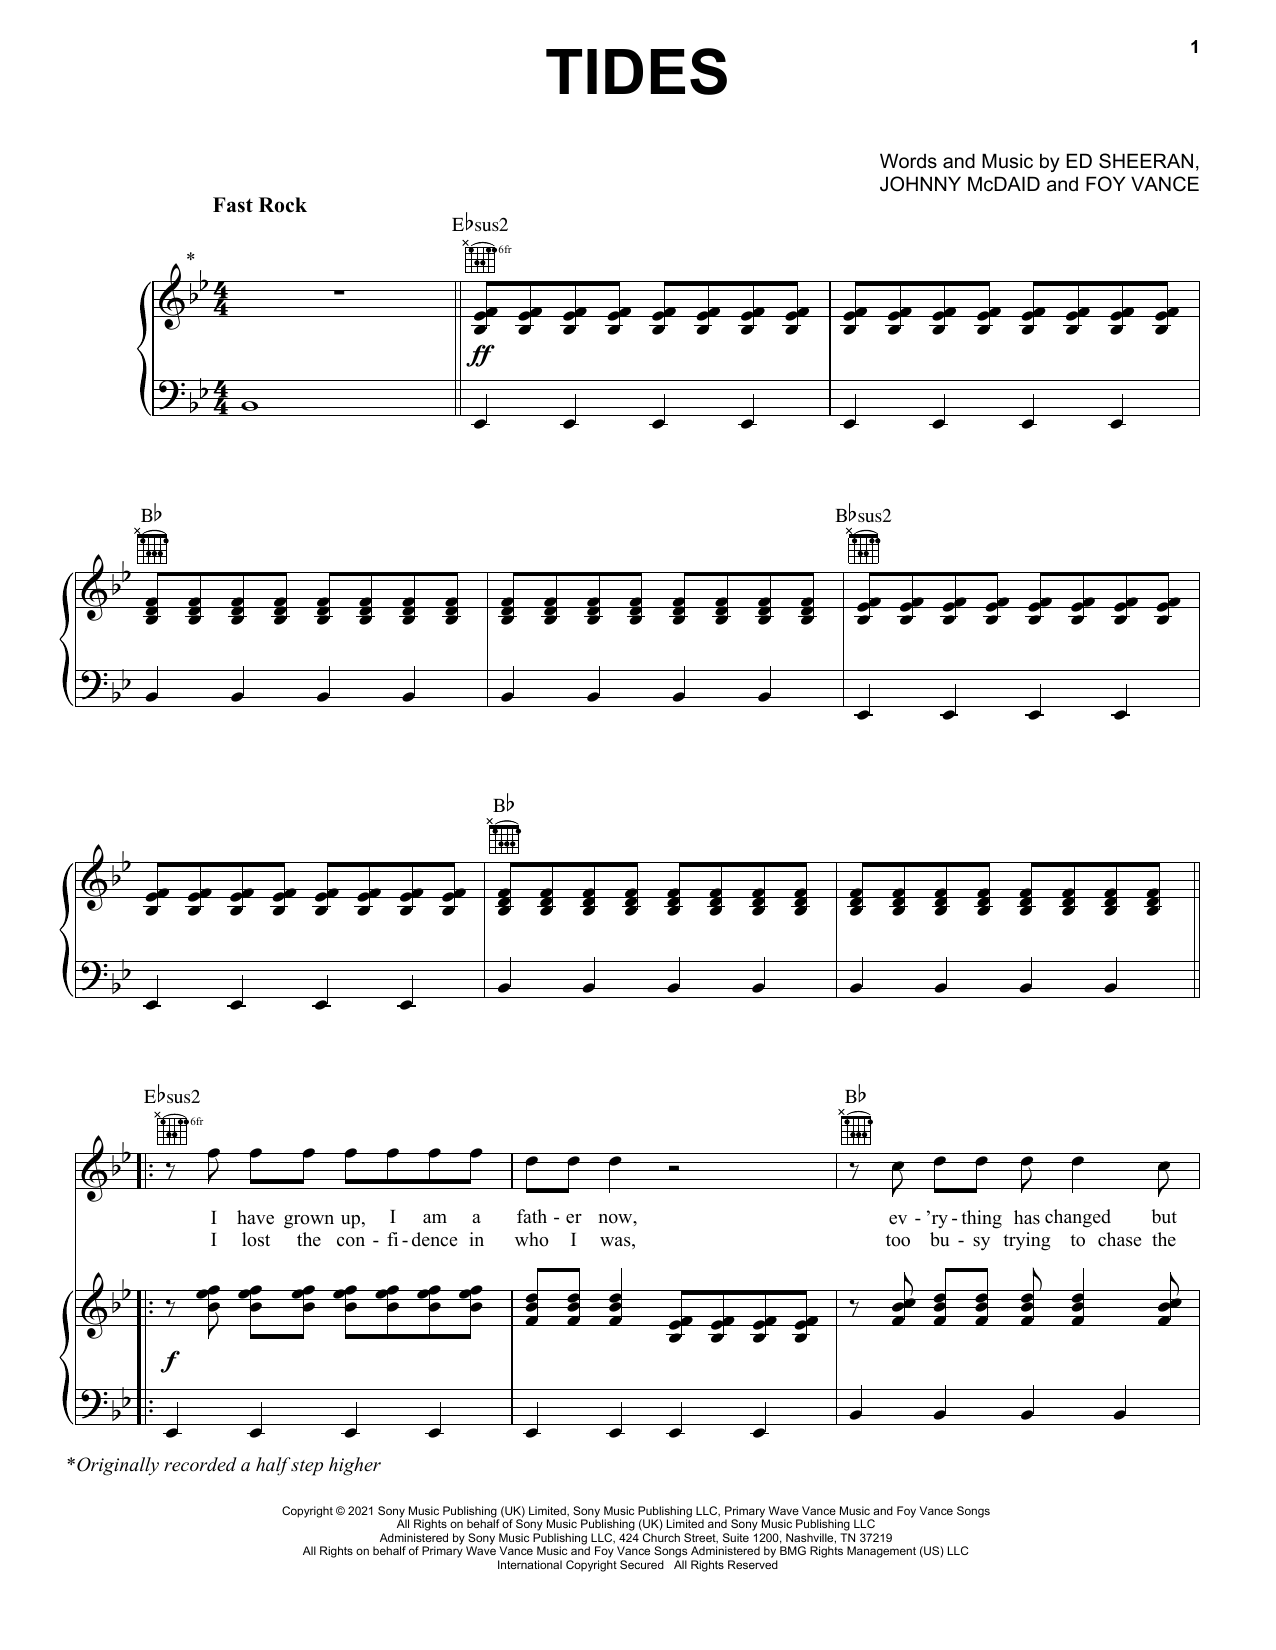 Ed Sheeran Tides Sheet Music Notes & Chords for Easy Piano - Download or Print PDF